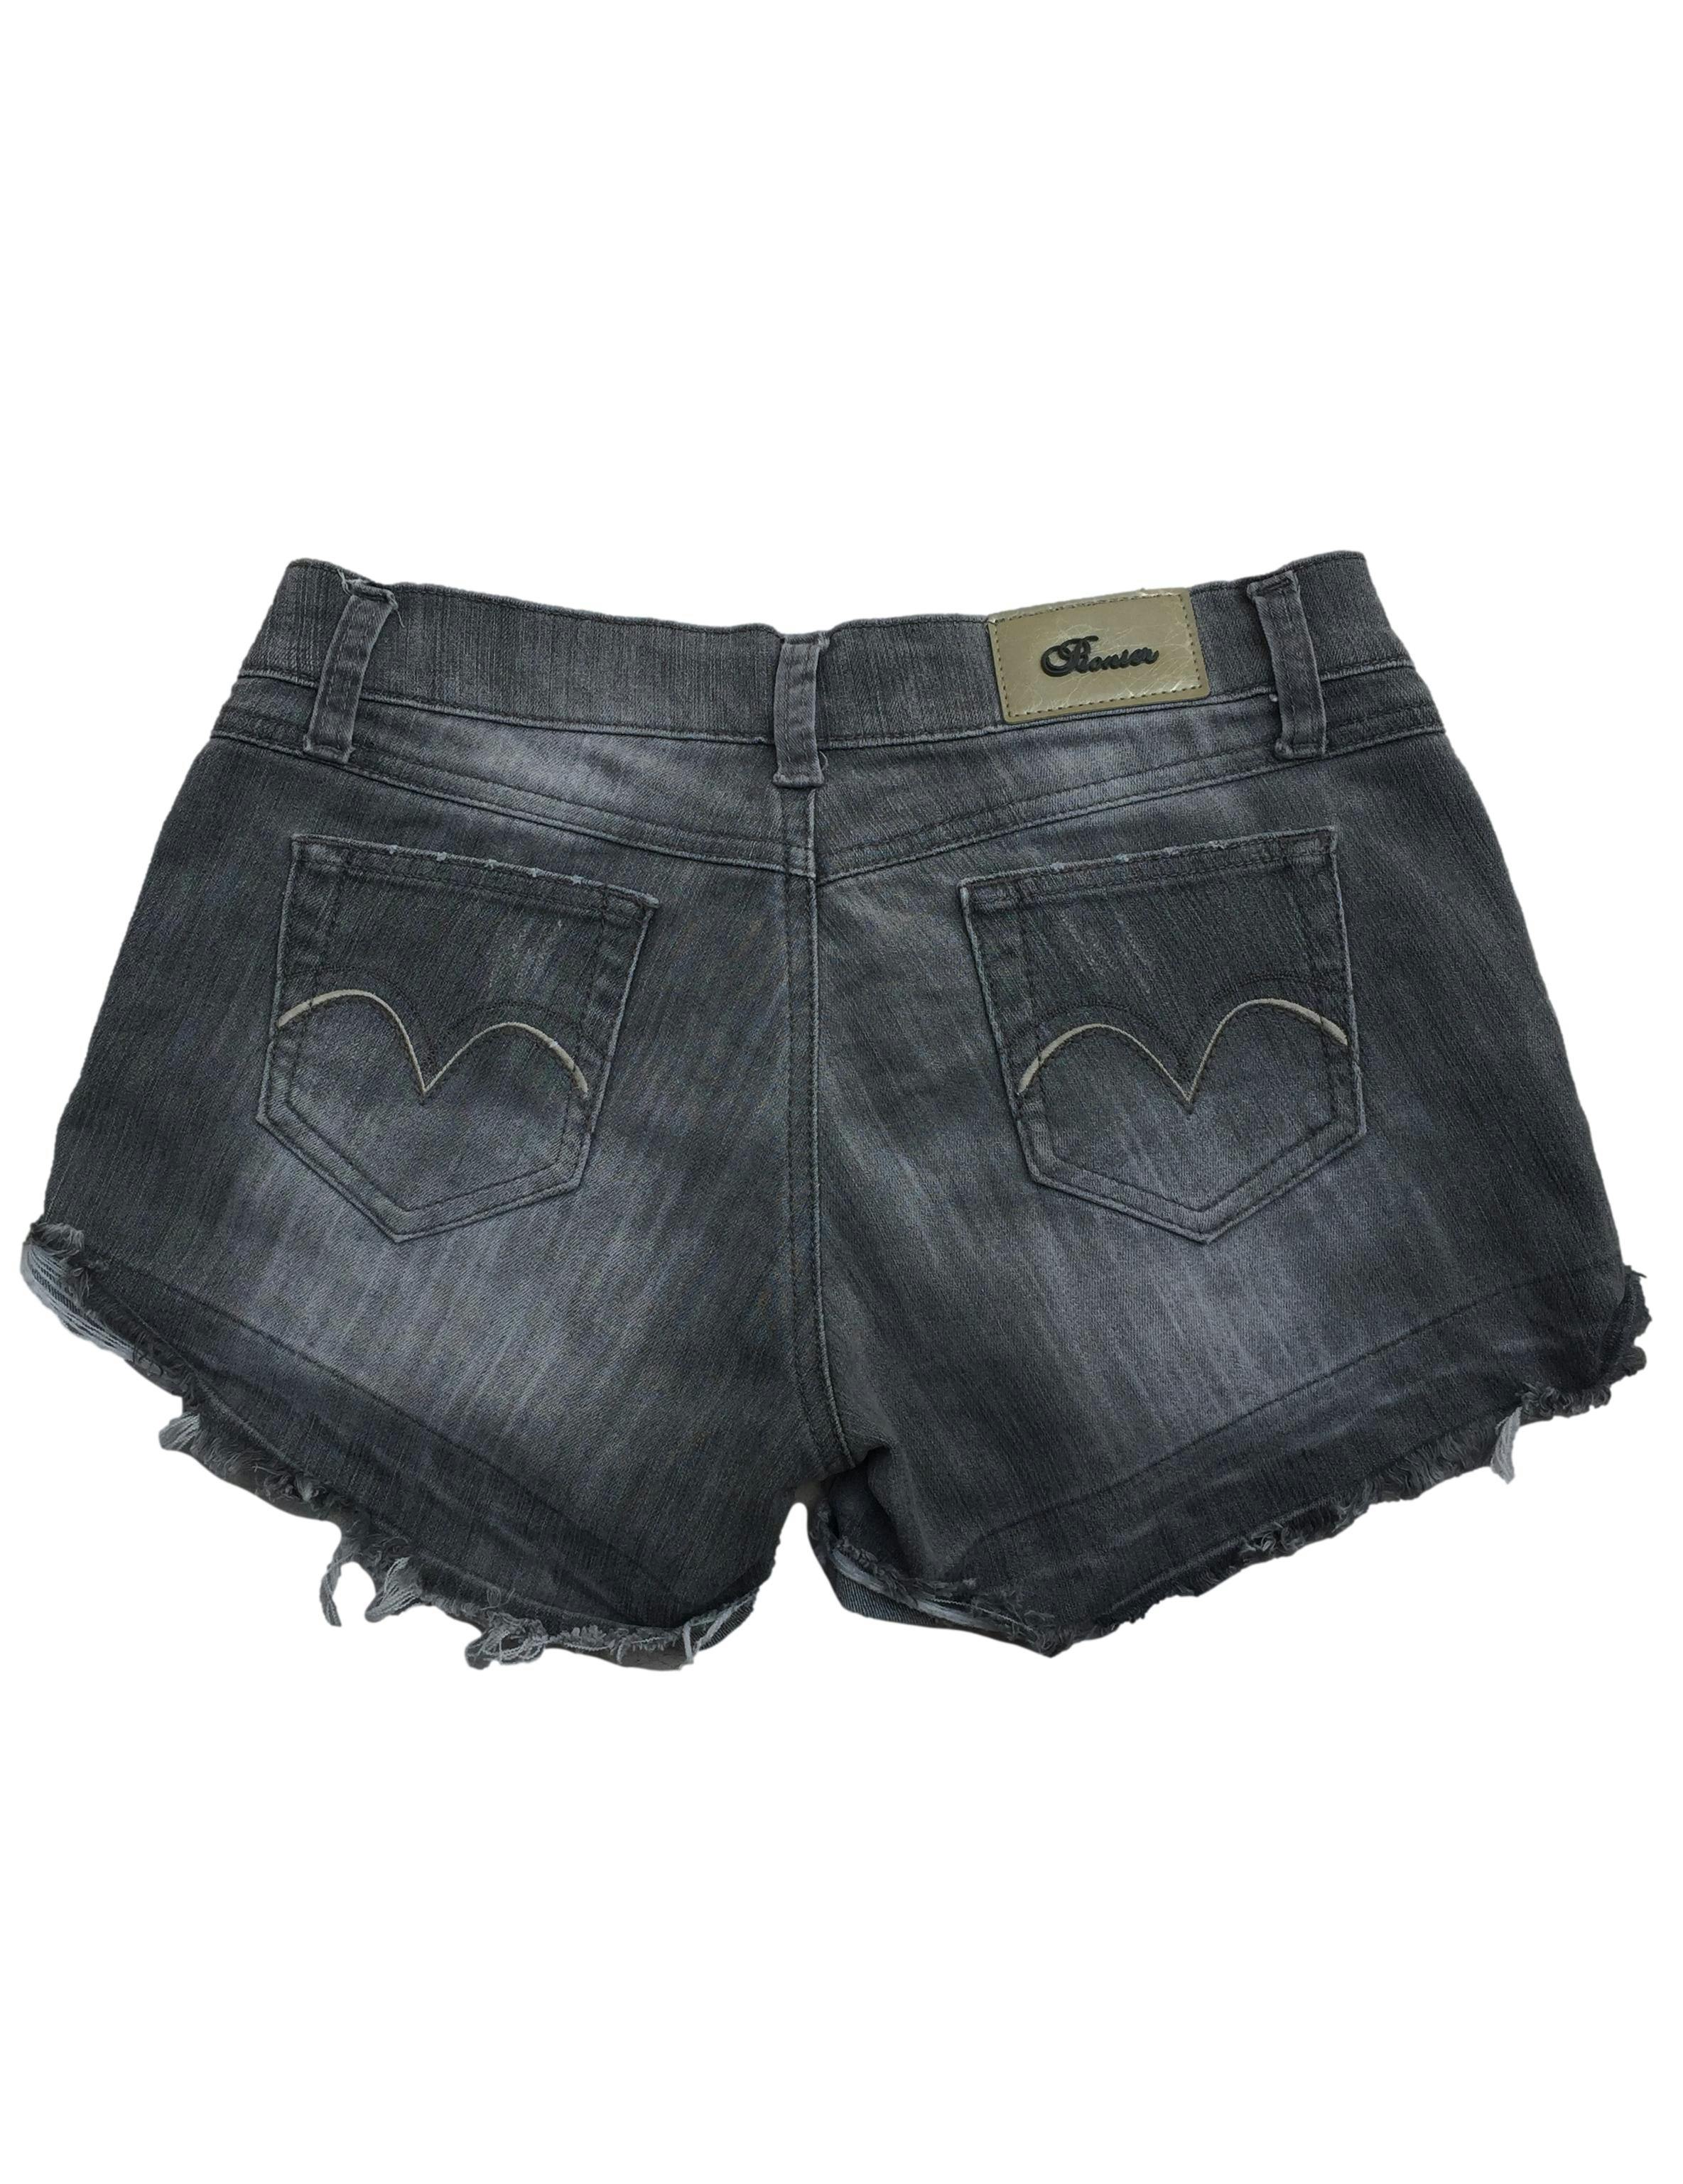 Short jean Pionier gris efecto lavado, bastas deshilachadas. Cintura: 70cm, Tiro: 20cm, Largo: 28cm